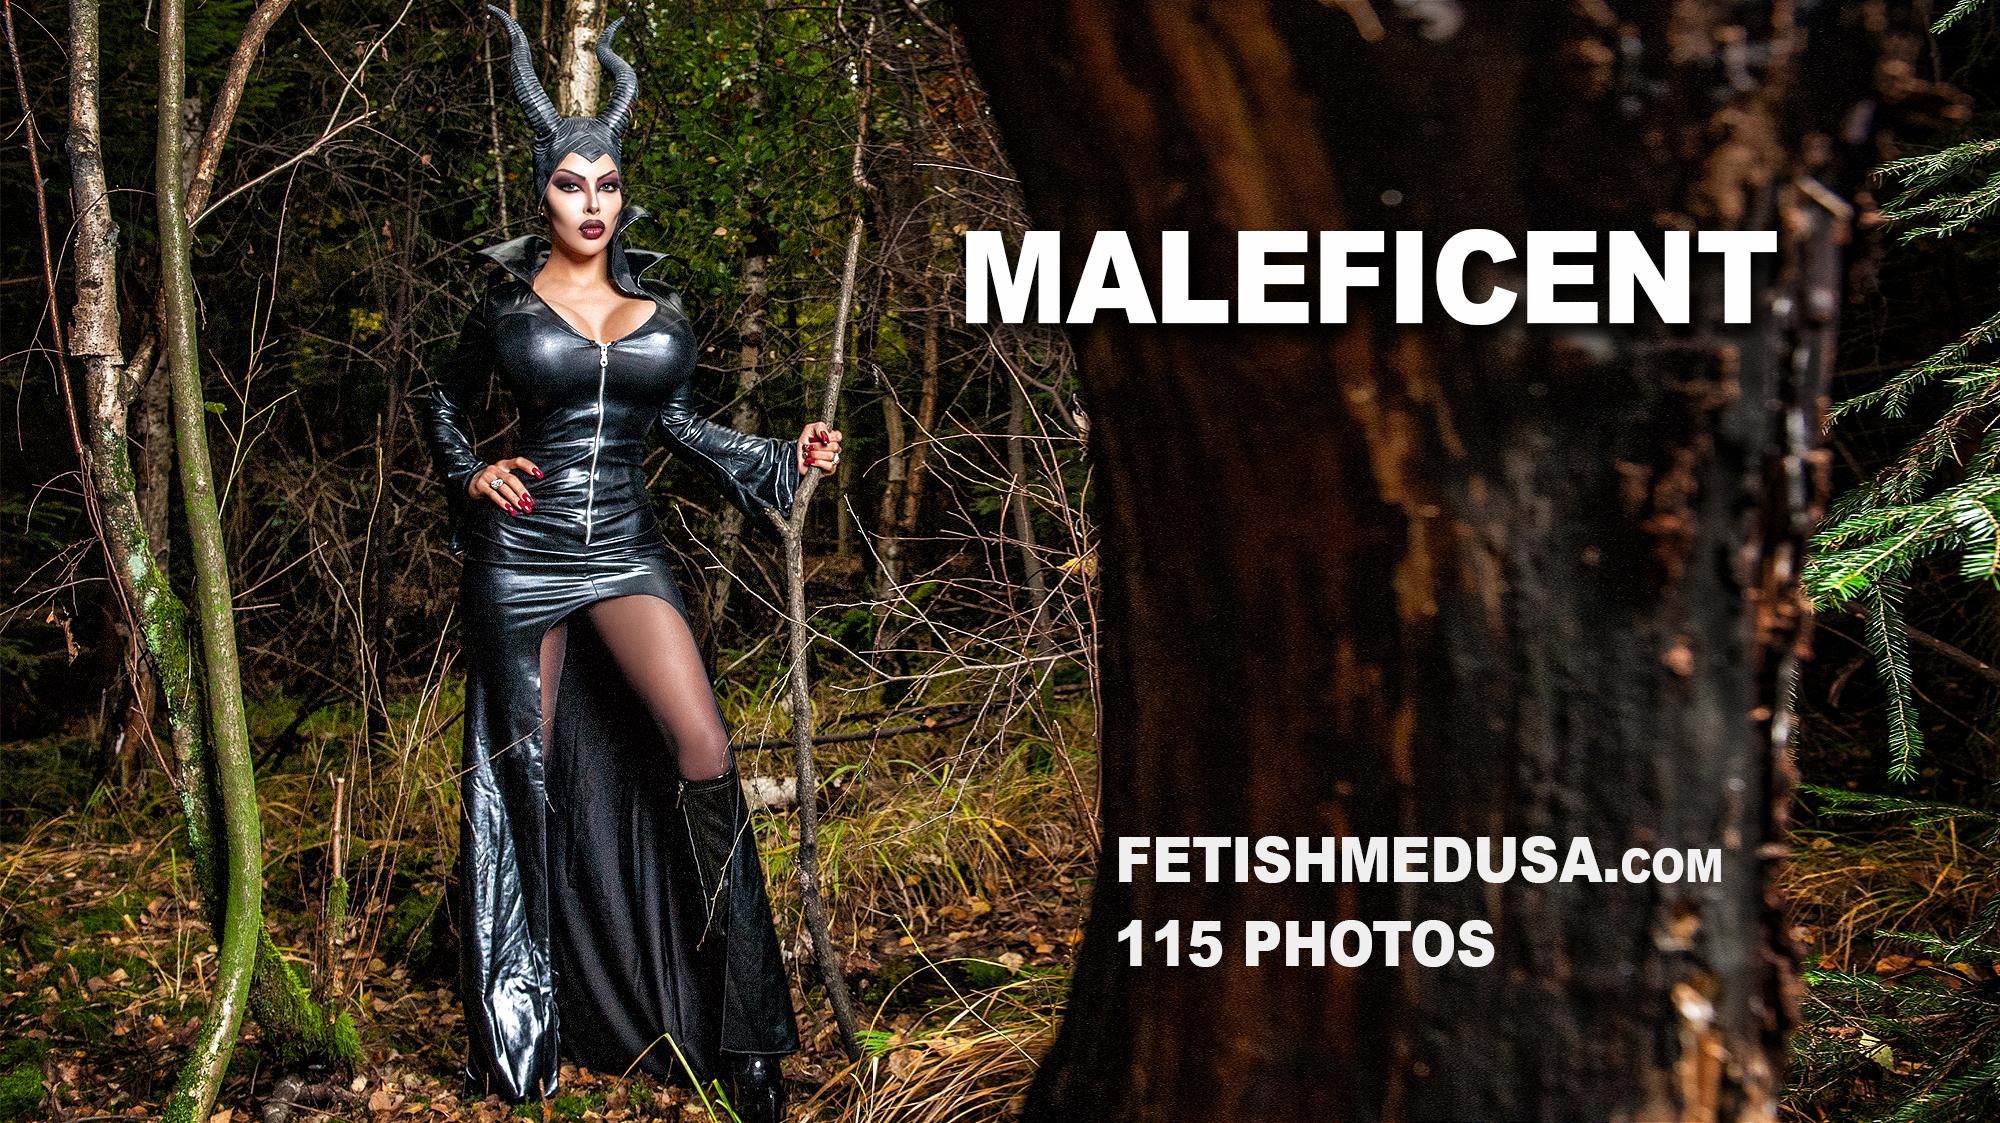 040 - Maleficent Cover 1.jpg